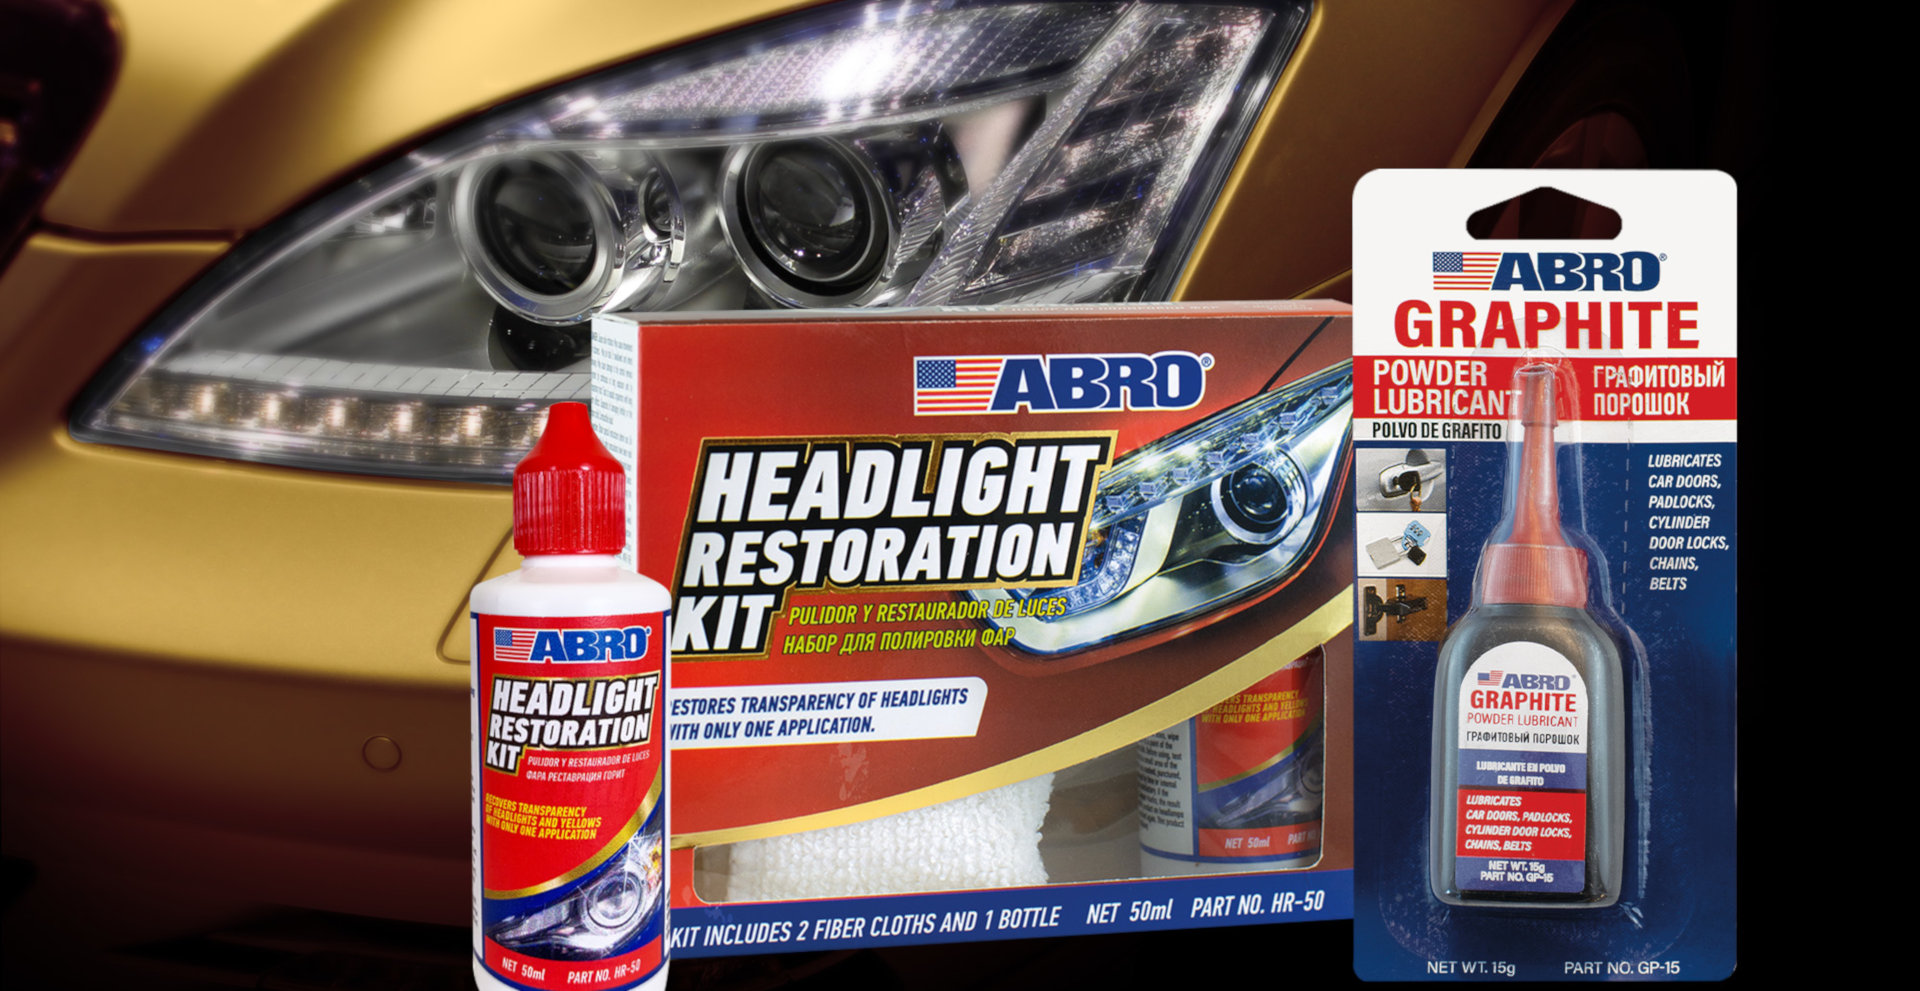 ABRO Headlight Restoration Kit and Graphite Powder Lubricant